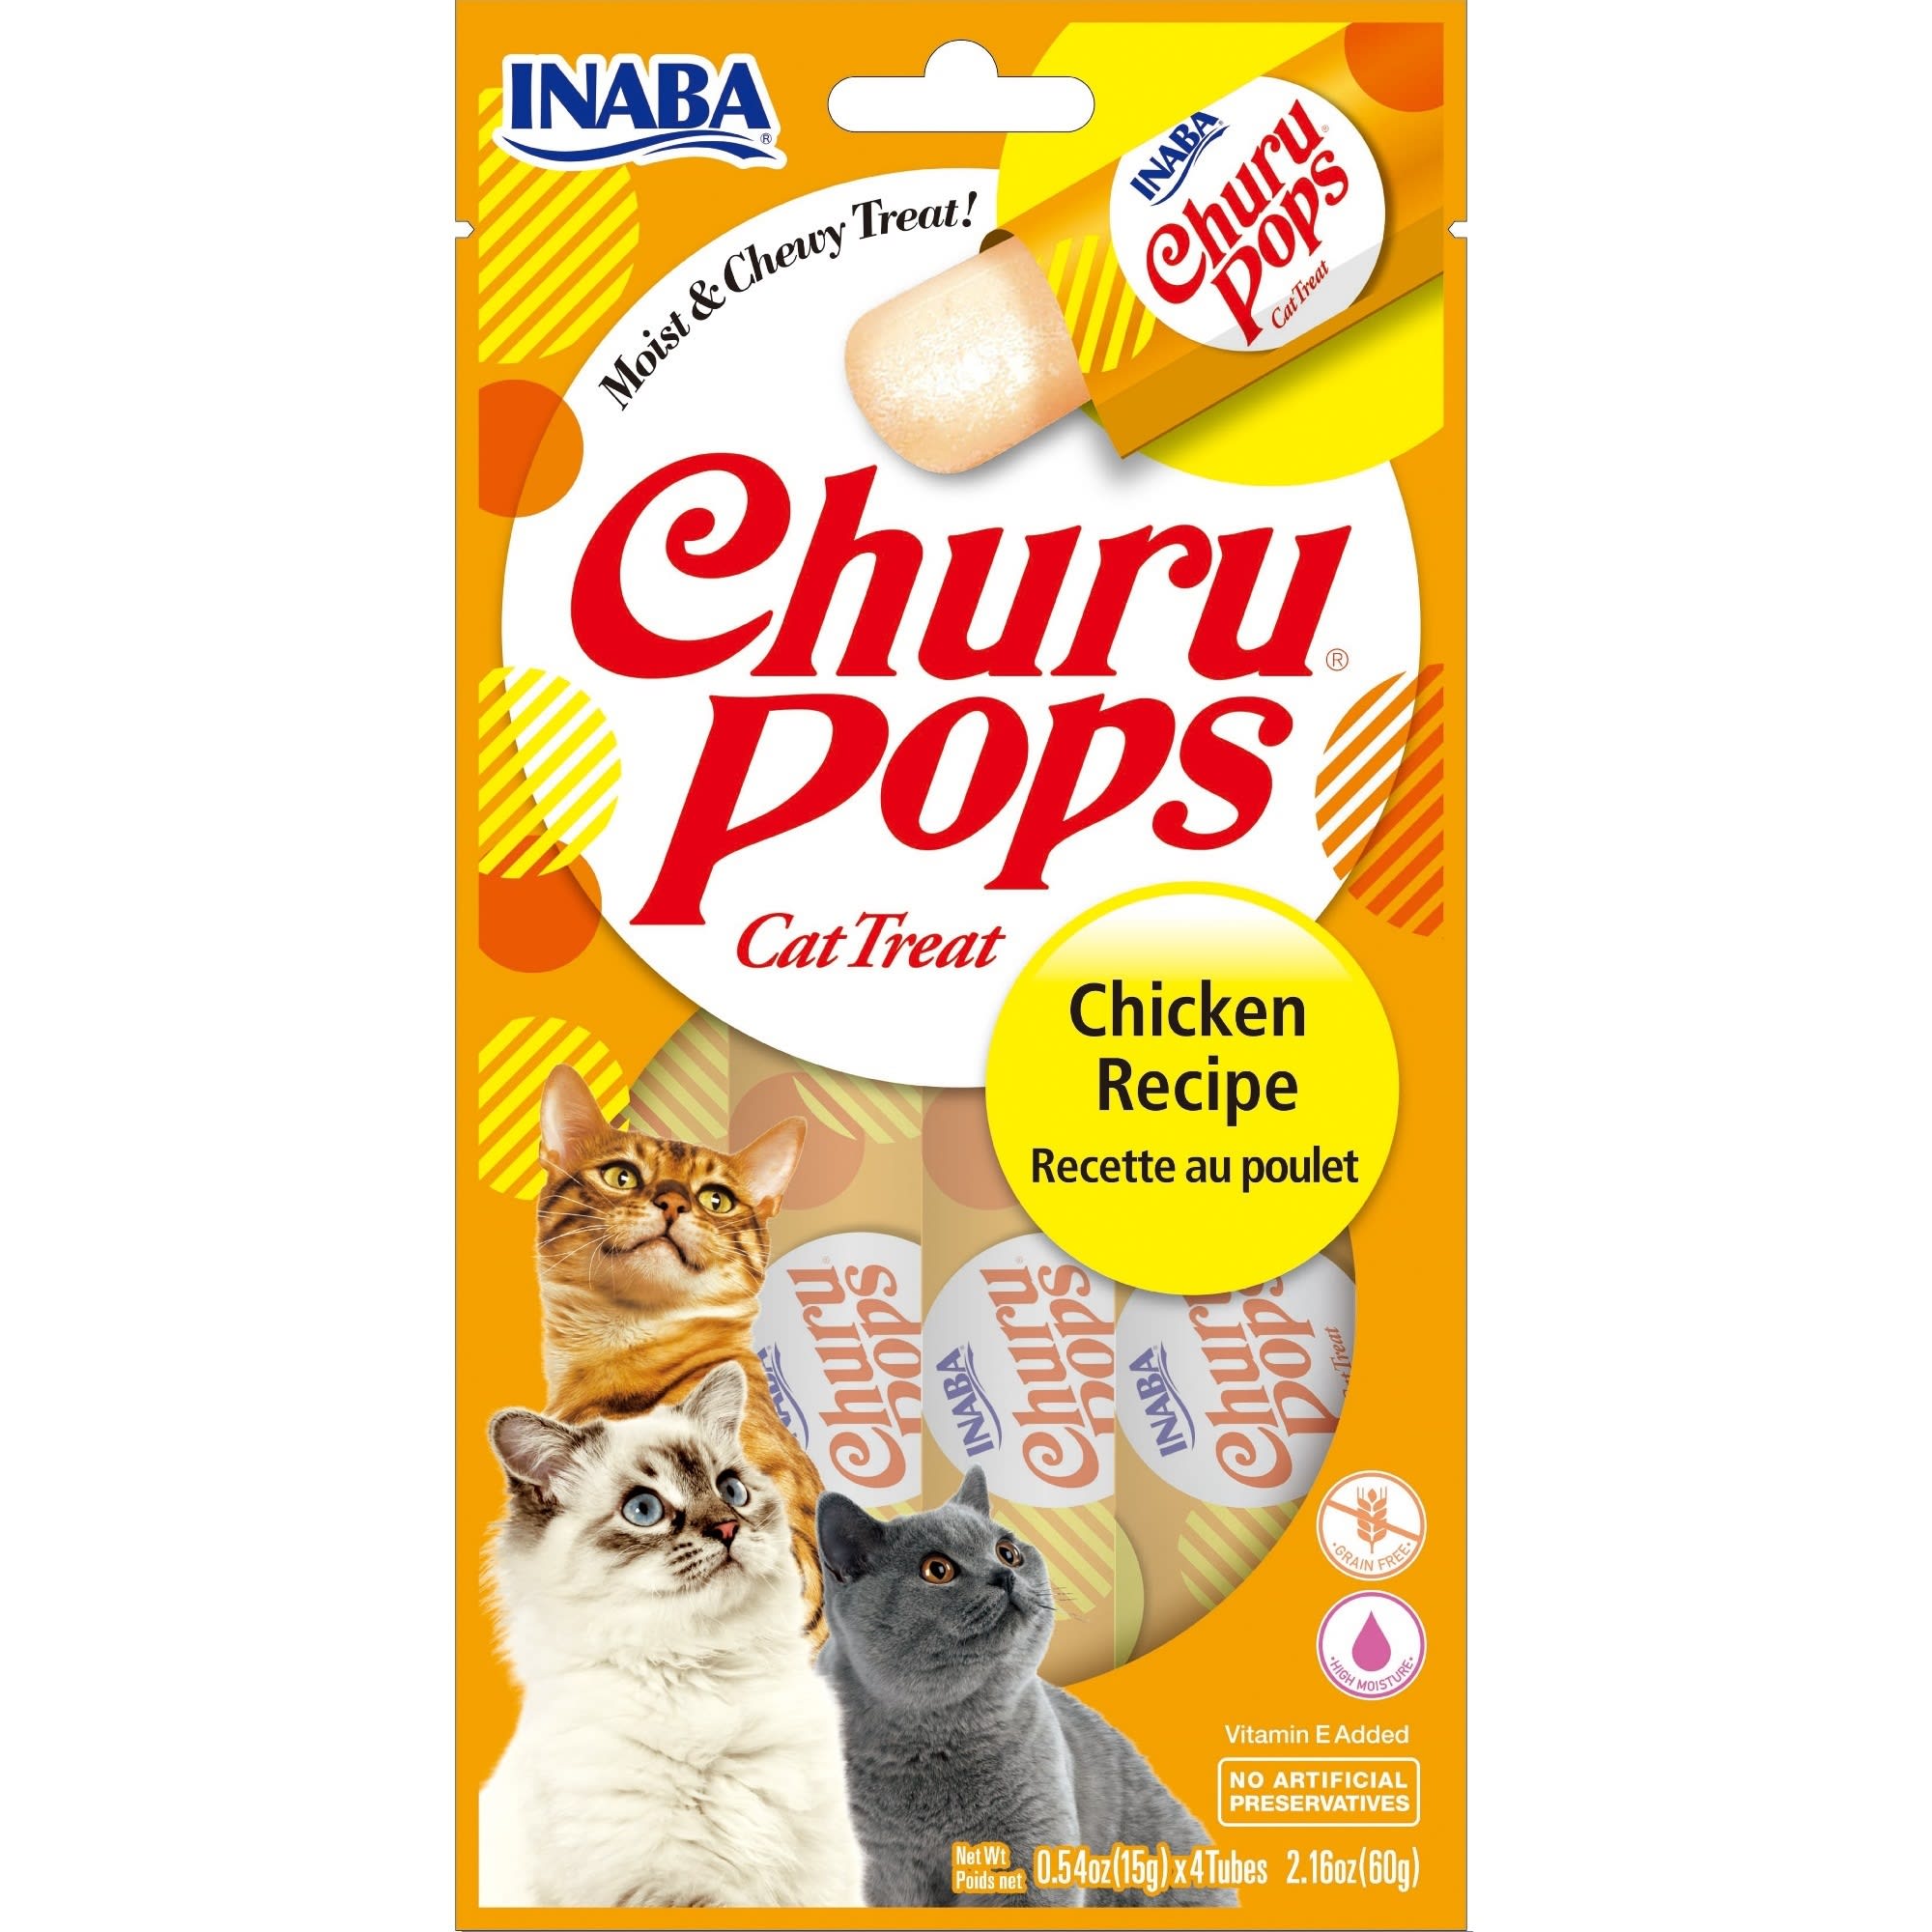 Inaba Churu Pops Chicken Receipe Cat Treats, 2.16 oz., Count of 24 Petco